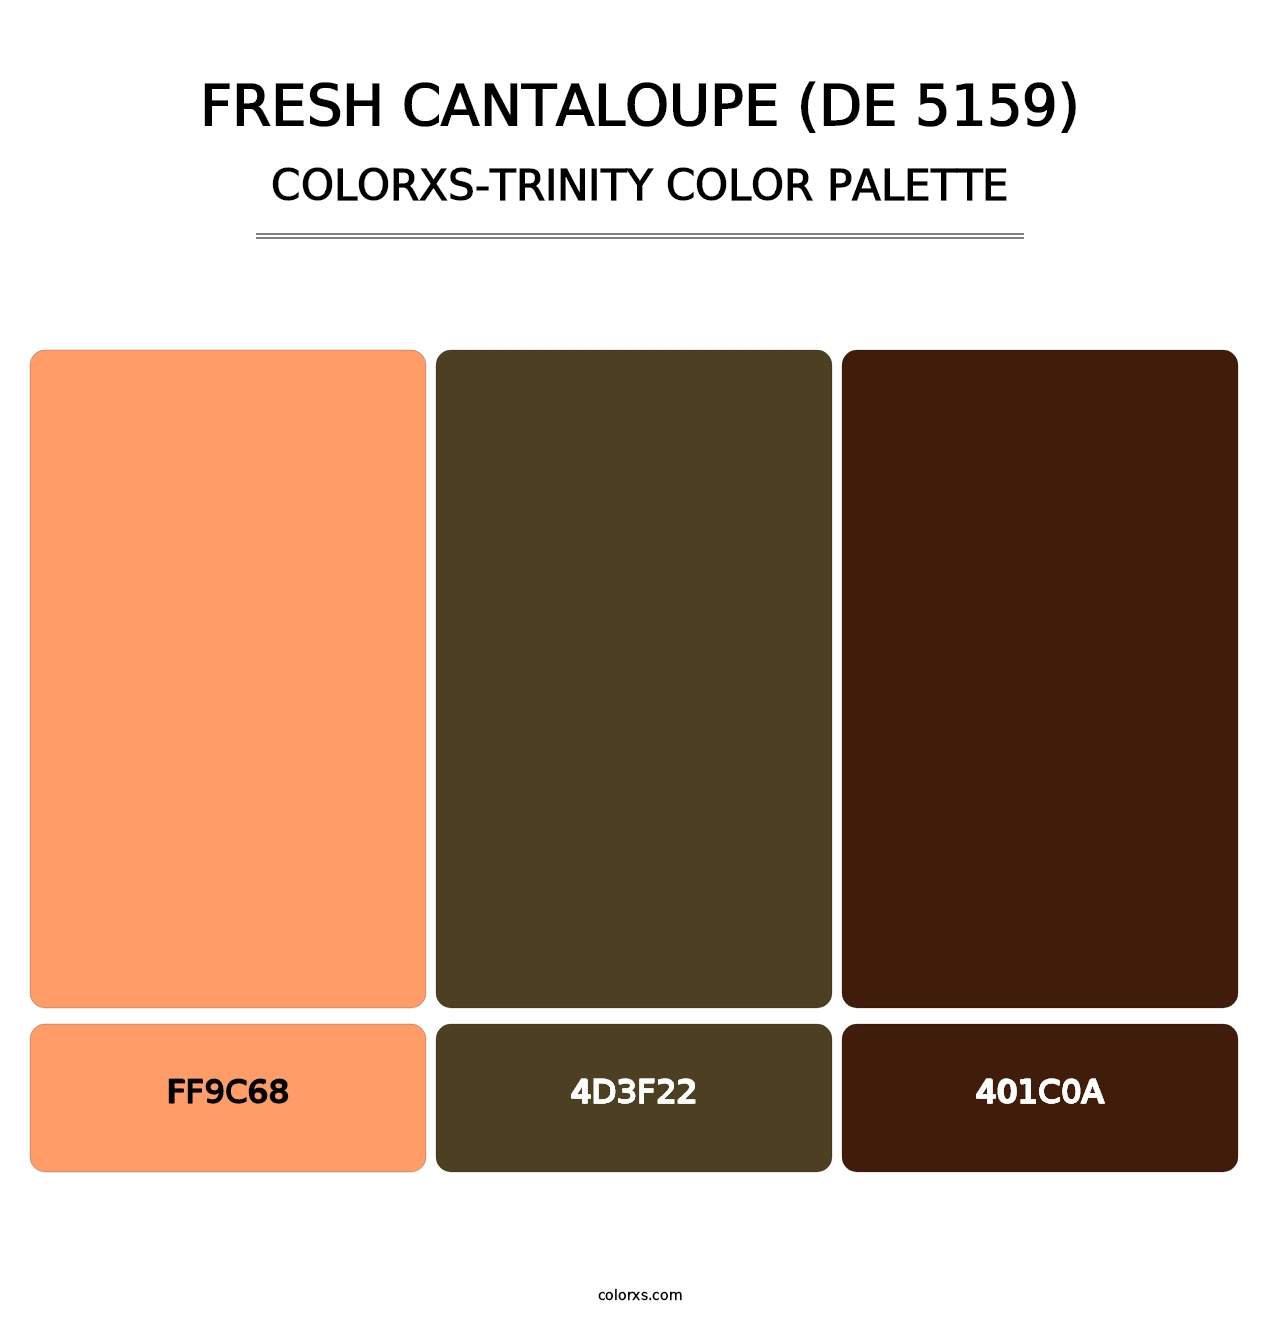 Fresh Cantaloupe (DE 5159) - Colorxs Trinity Palette